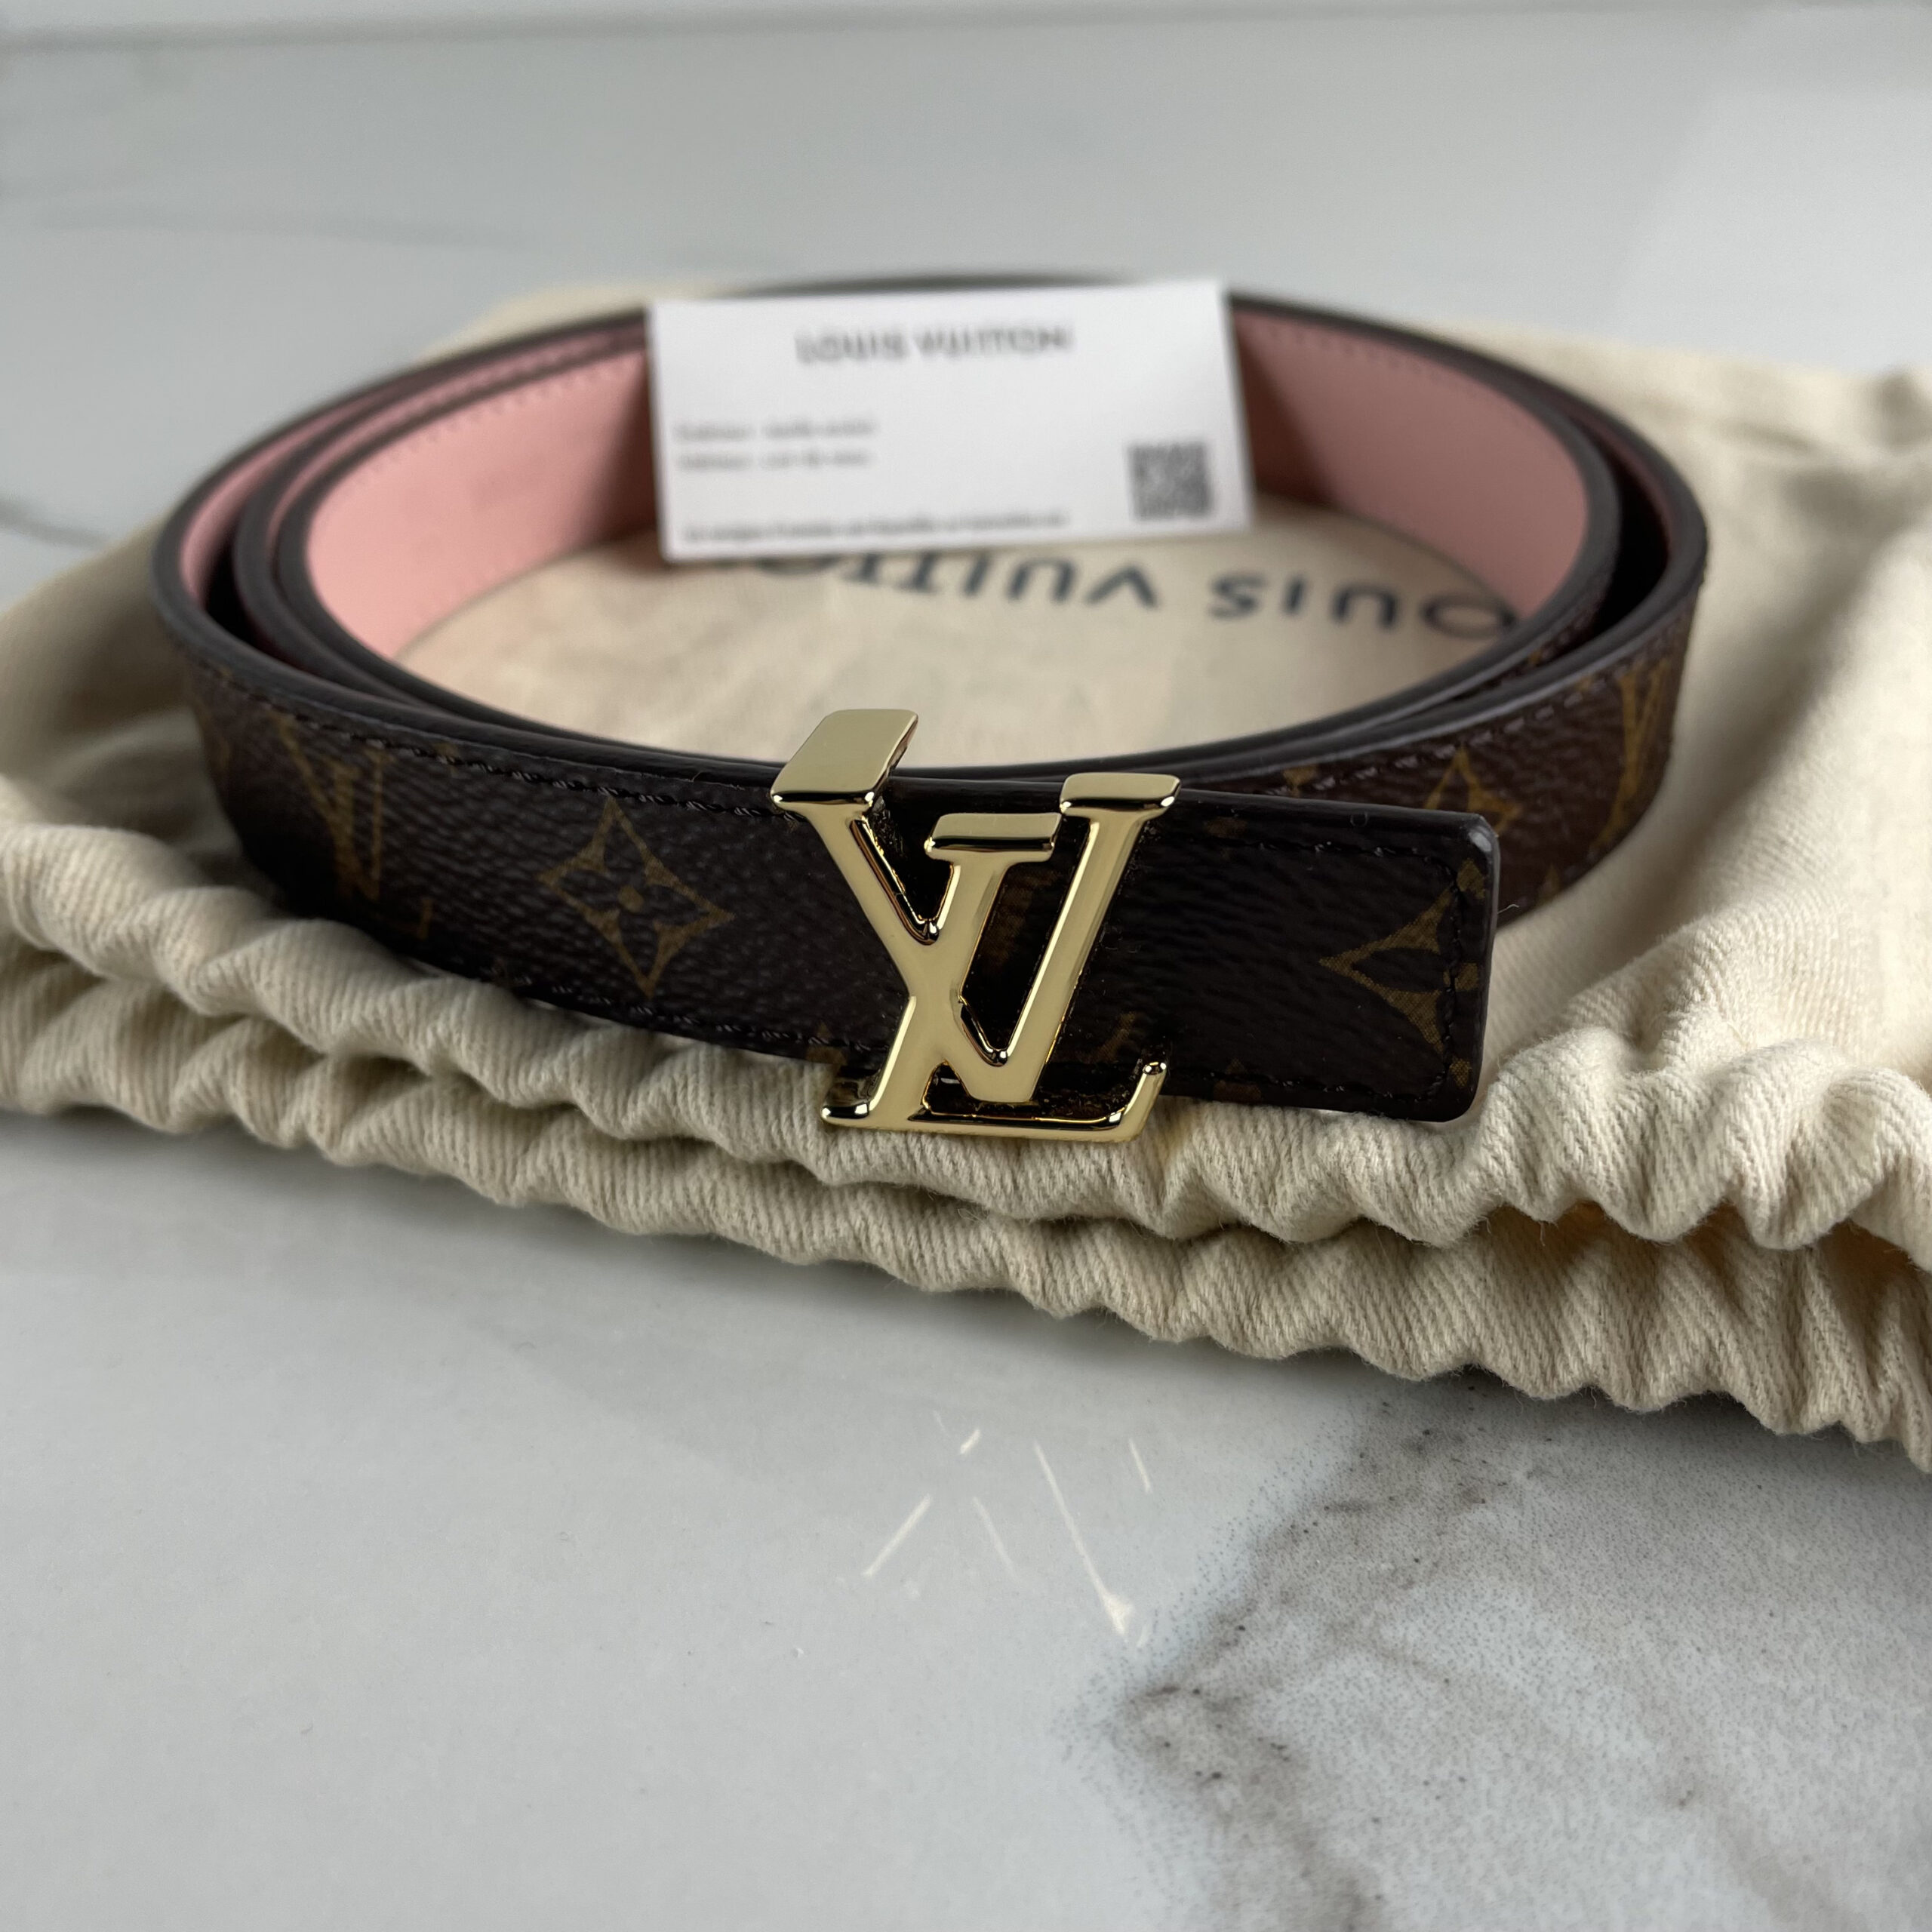 Louis Vuitton LV Iconic 20mm Reversible Belt Brown + Calf Leather. Size 85 cm